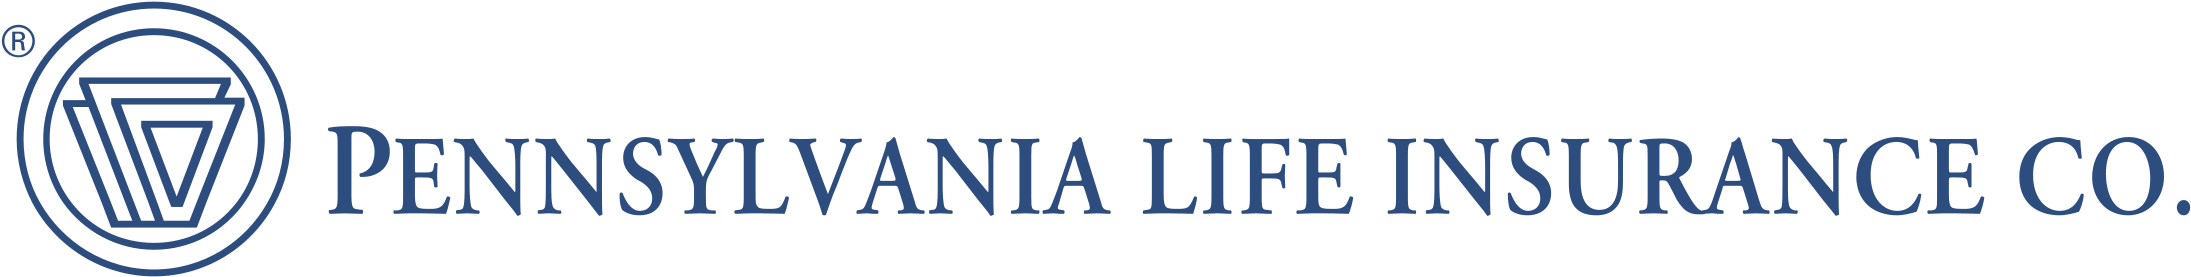 Pennsylvania Life Insurance Company Logo PNG